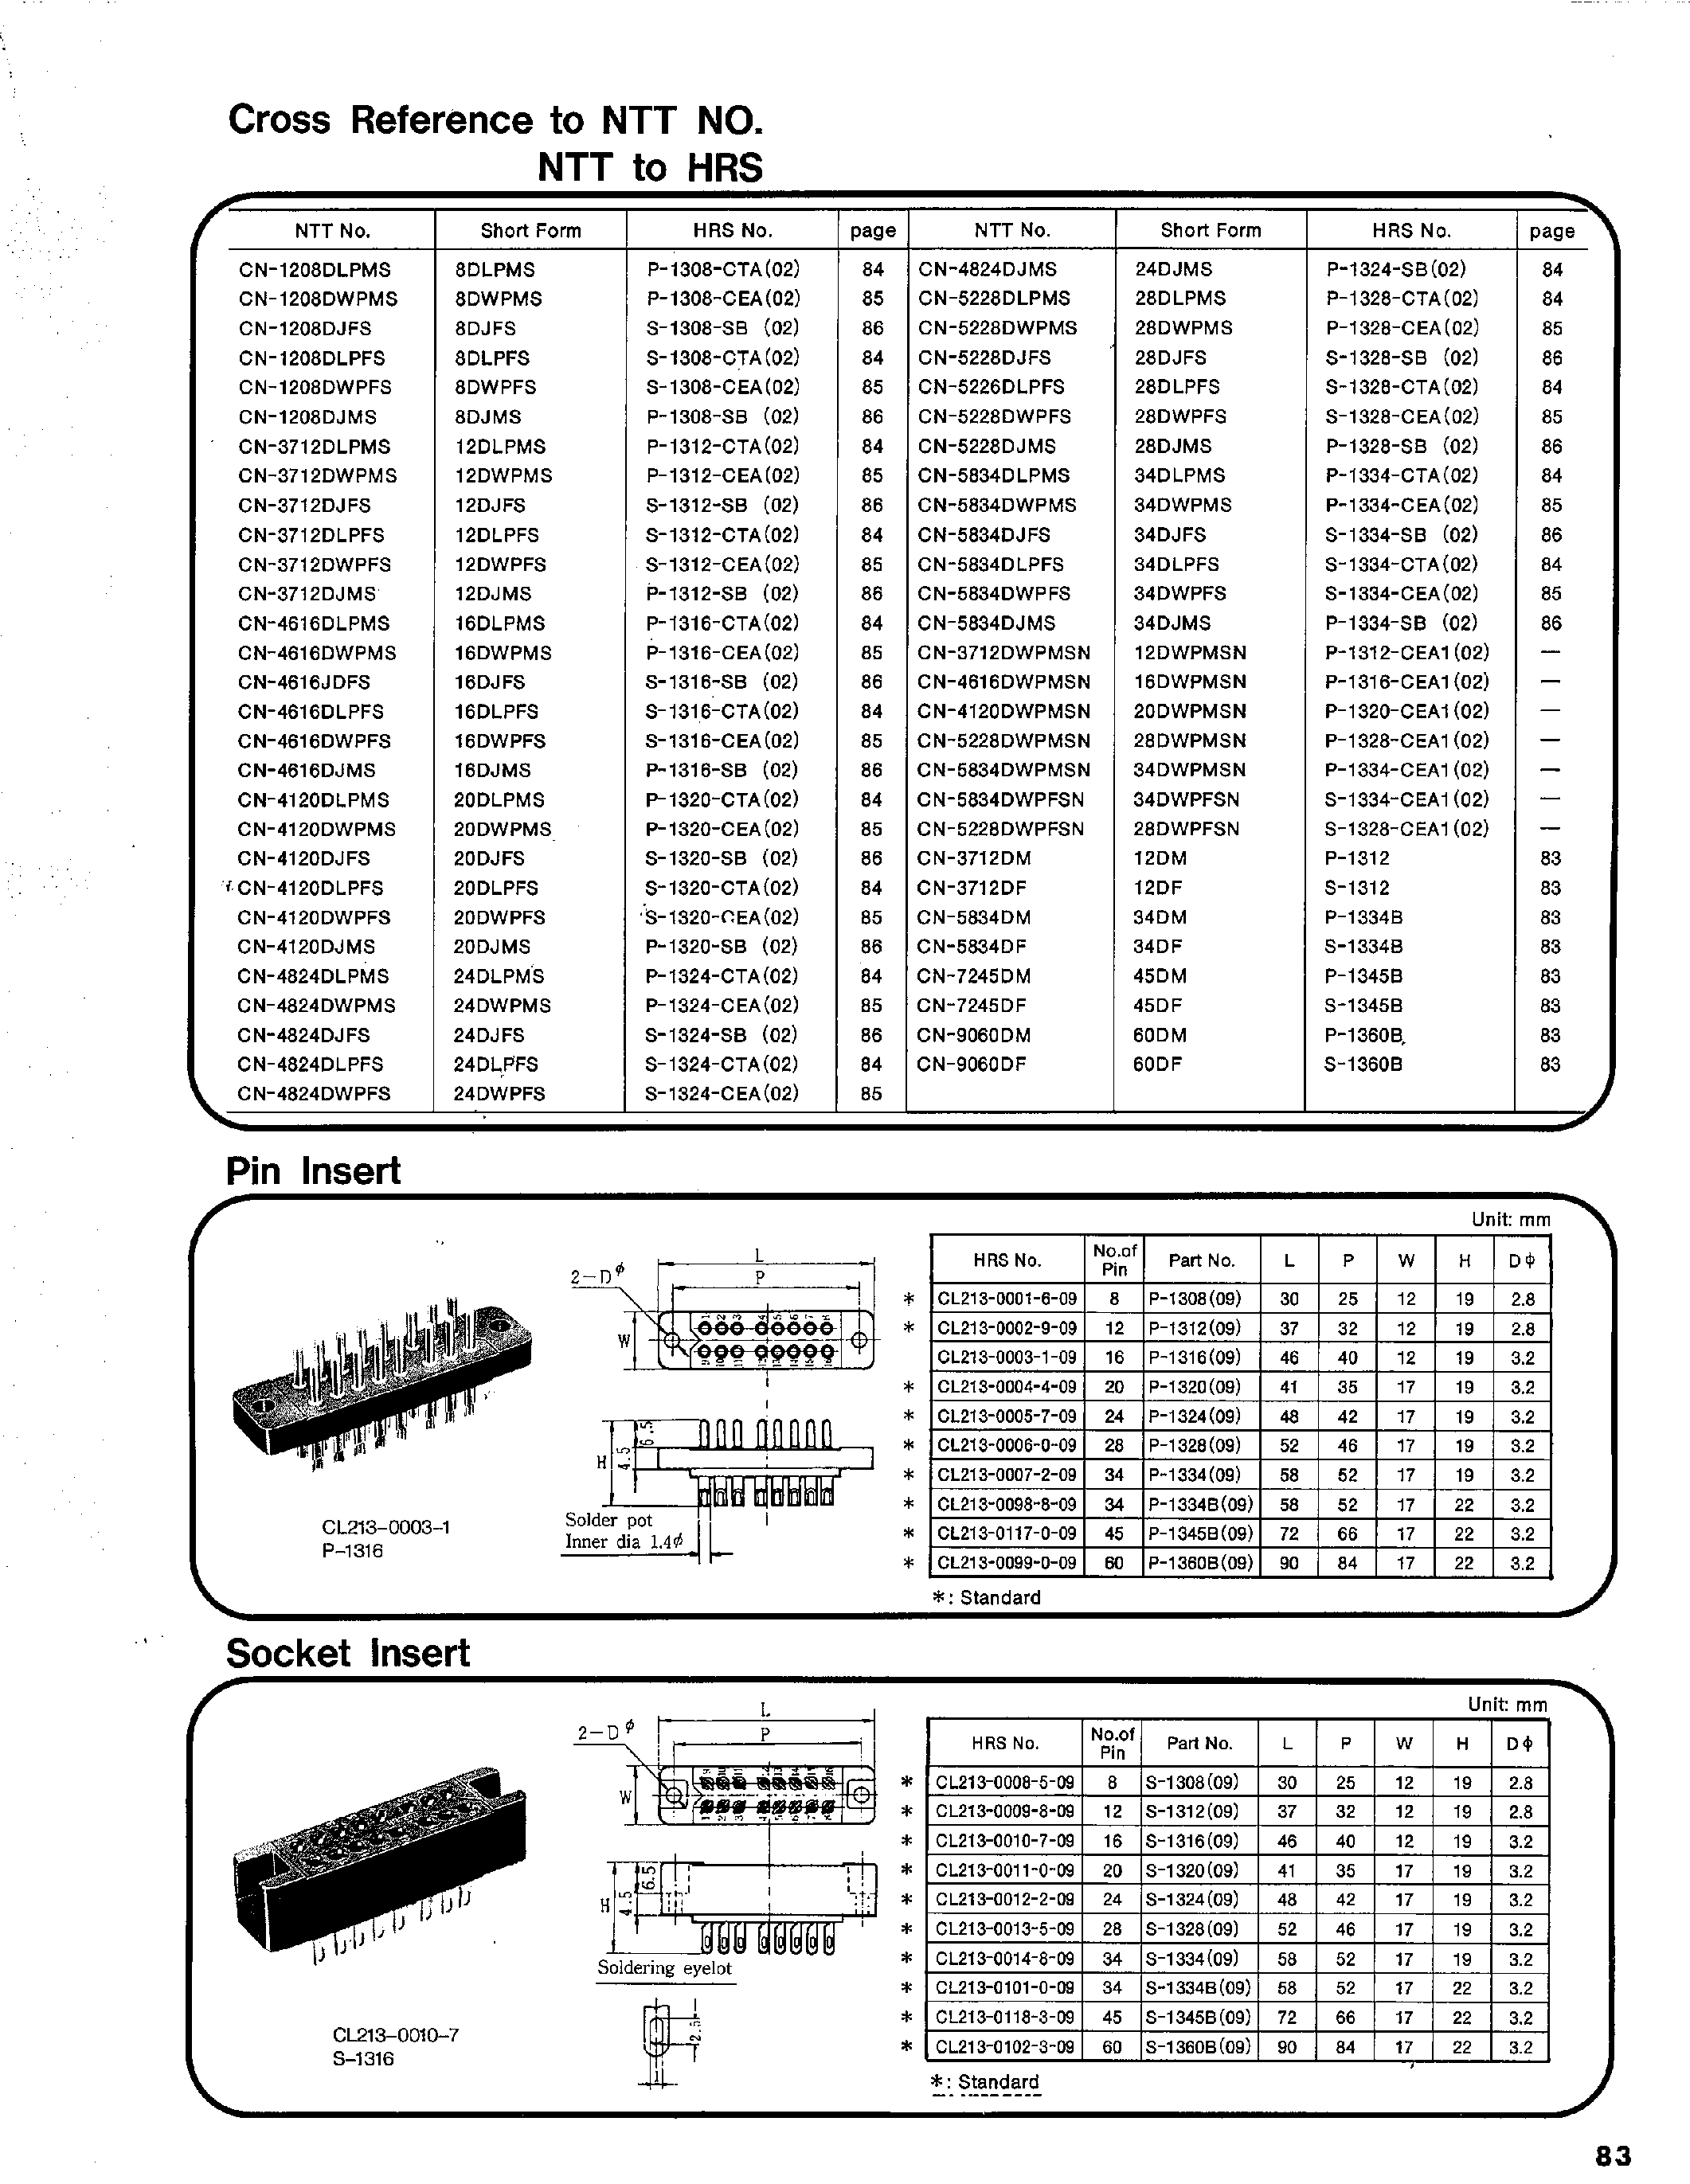 Datasheet P-1334-CT - 1300 SERIES RECTANGULAR CONNECTORS page 2